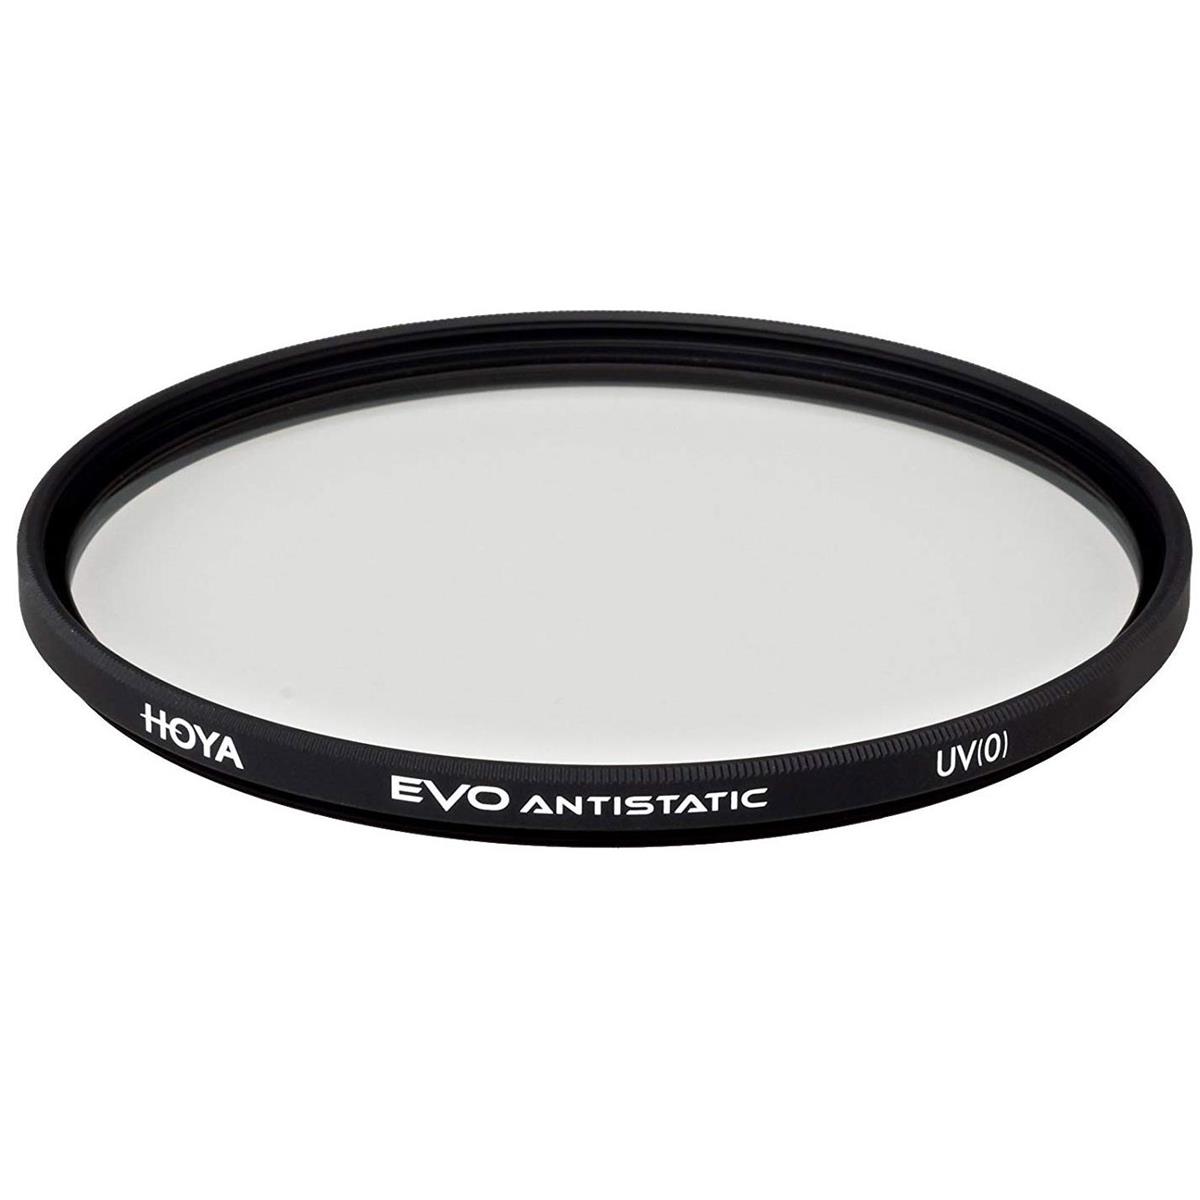 Hoya Evo Antistatic UV Filter - 67mm цена и фото